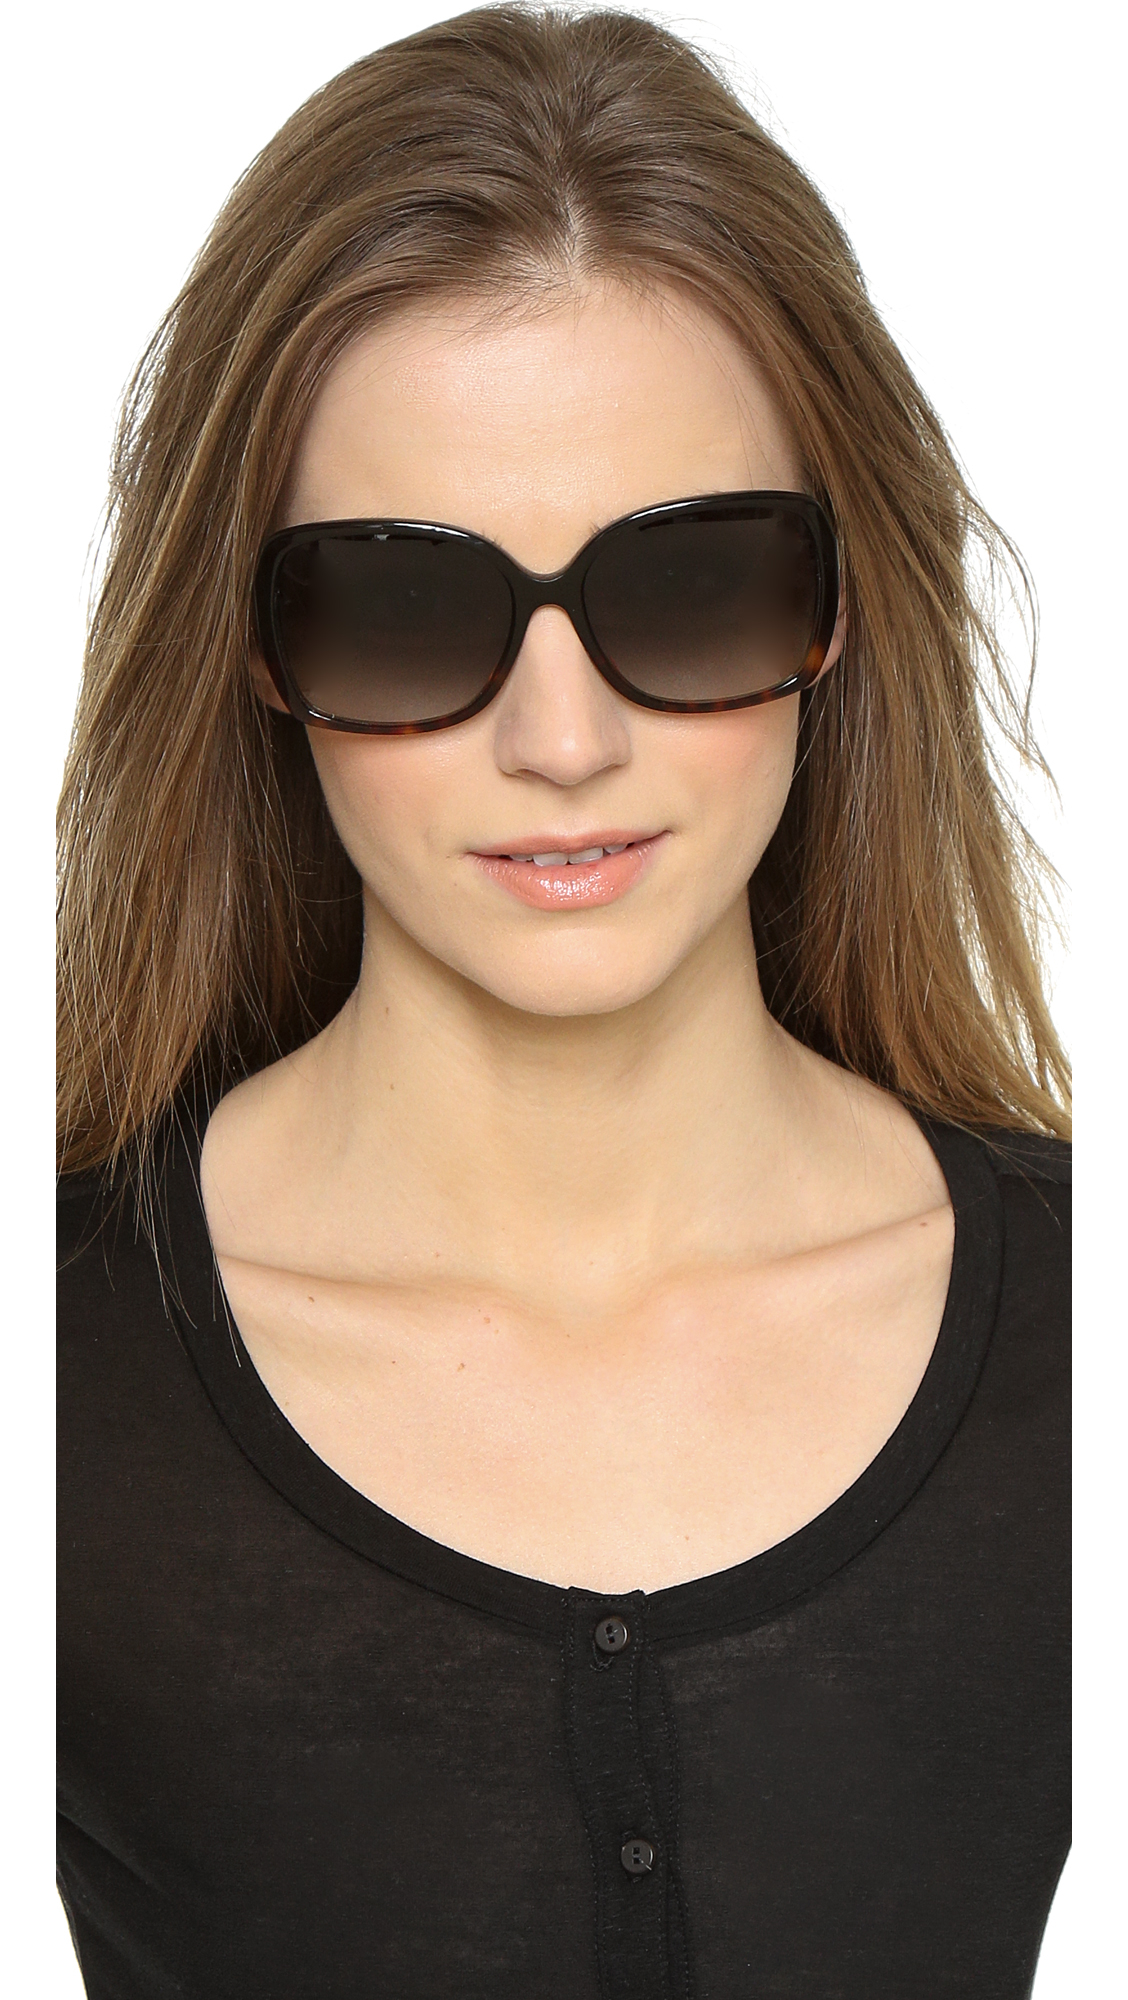 Lyst - Kate Spade New York Darilynn Sunglasses in Black